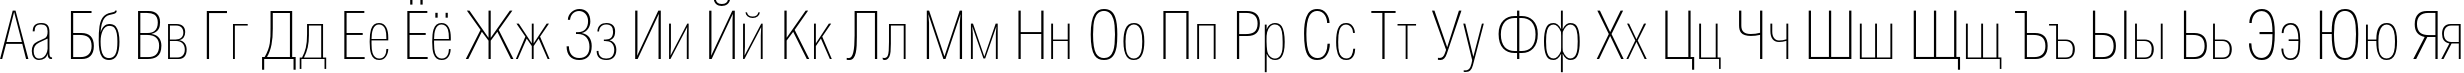 Пример написания русского алфавита шрифтом HeliosCondThin